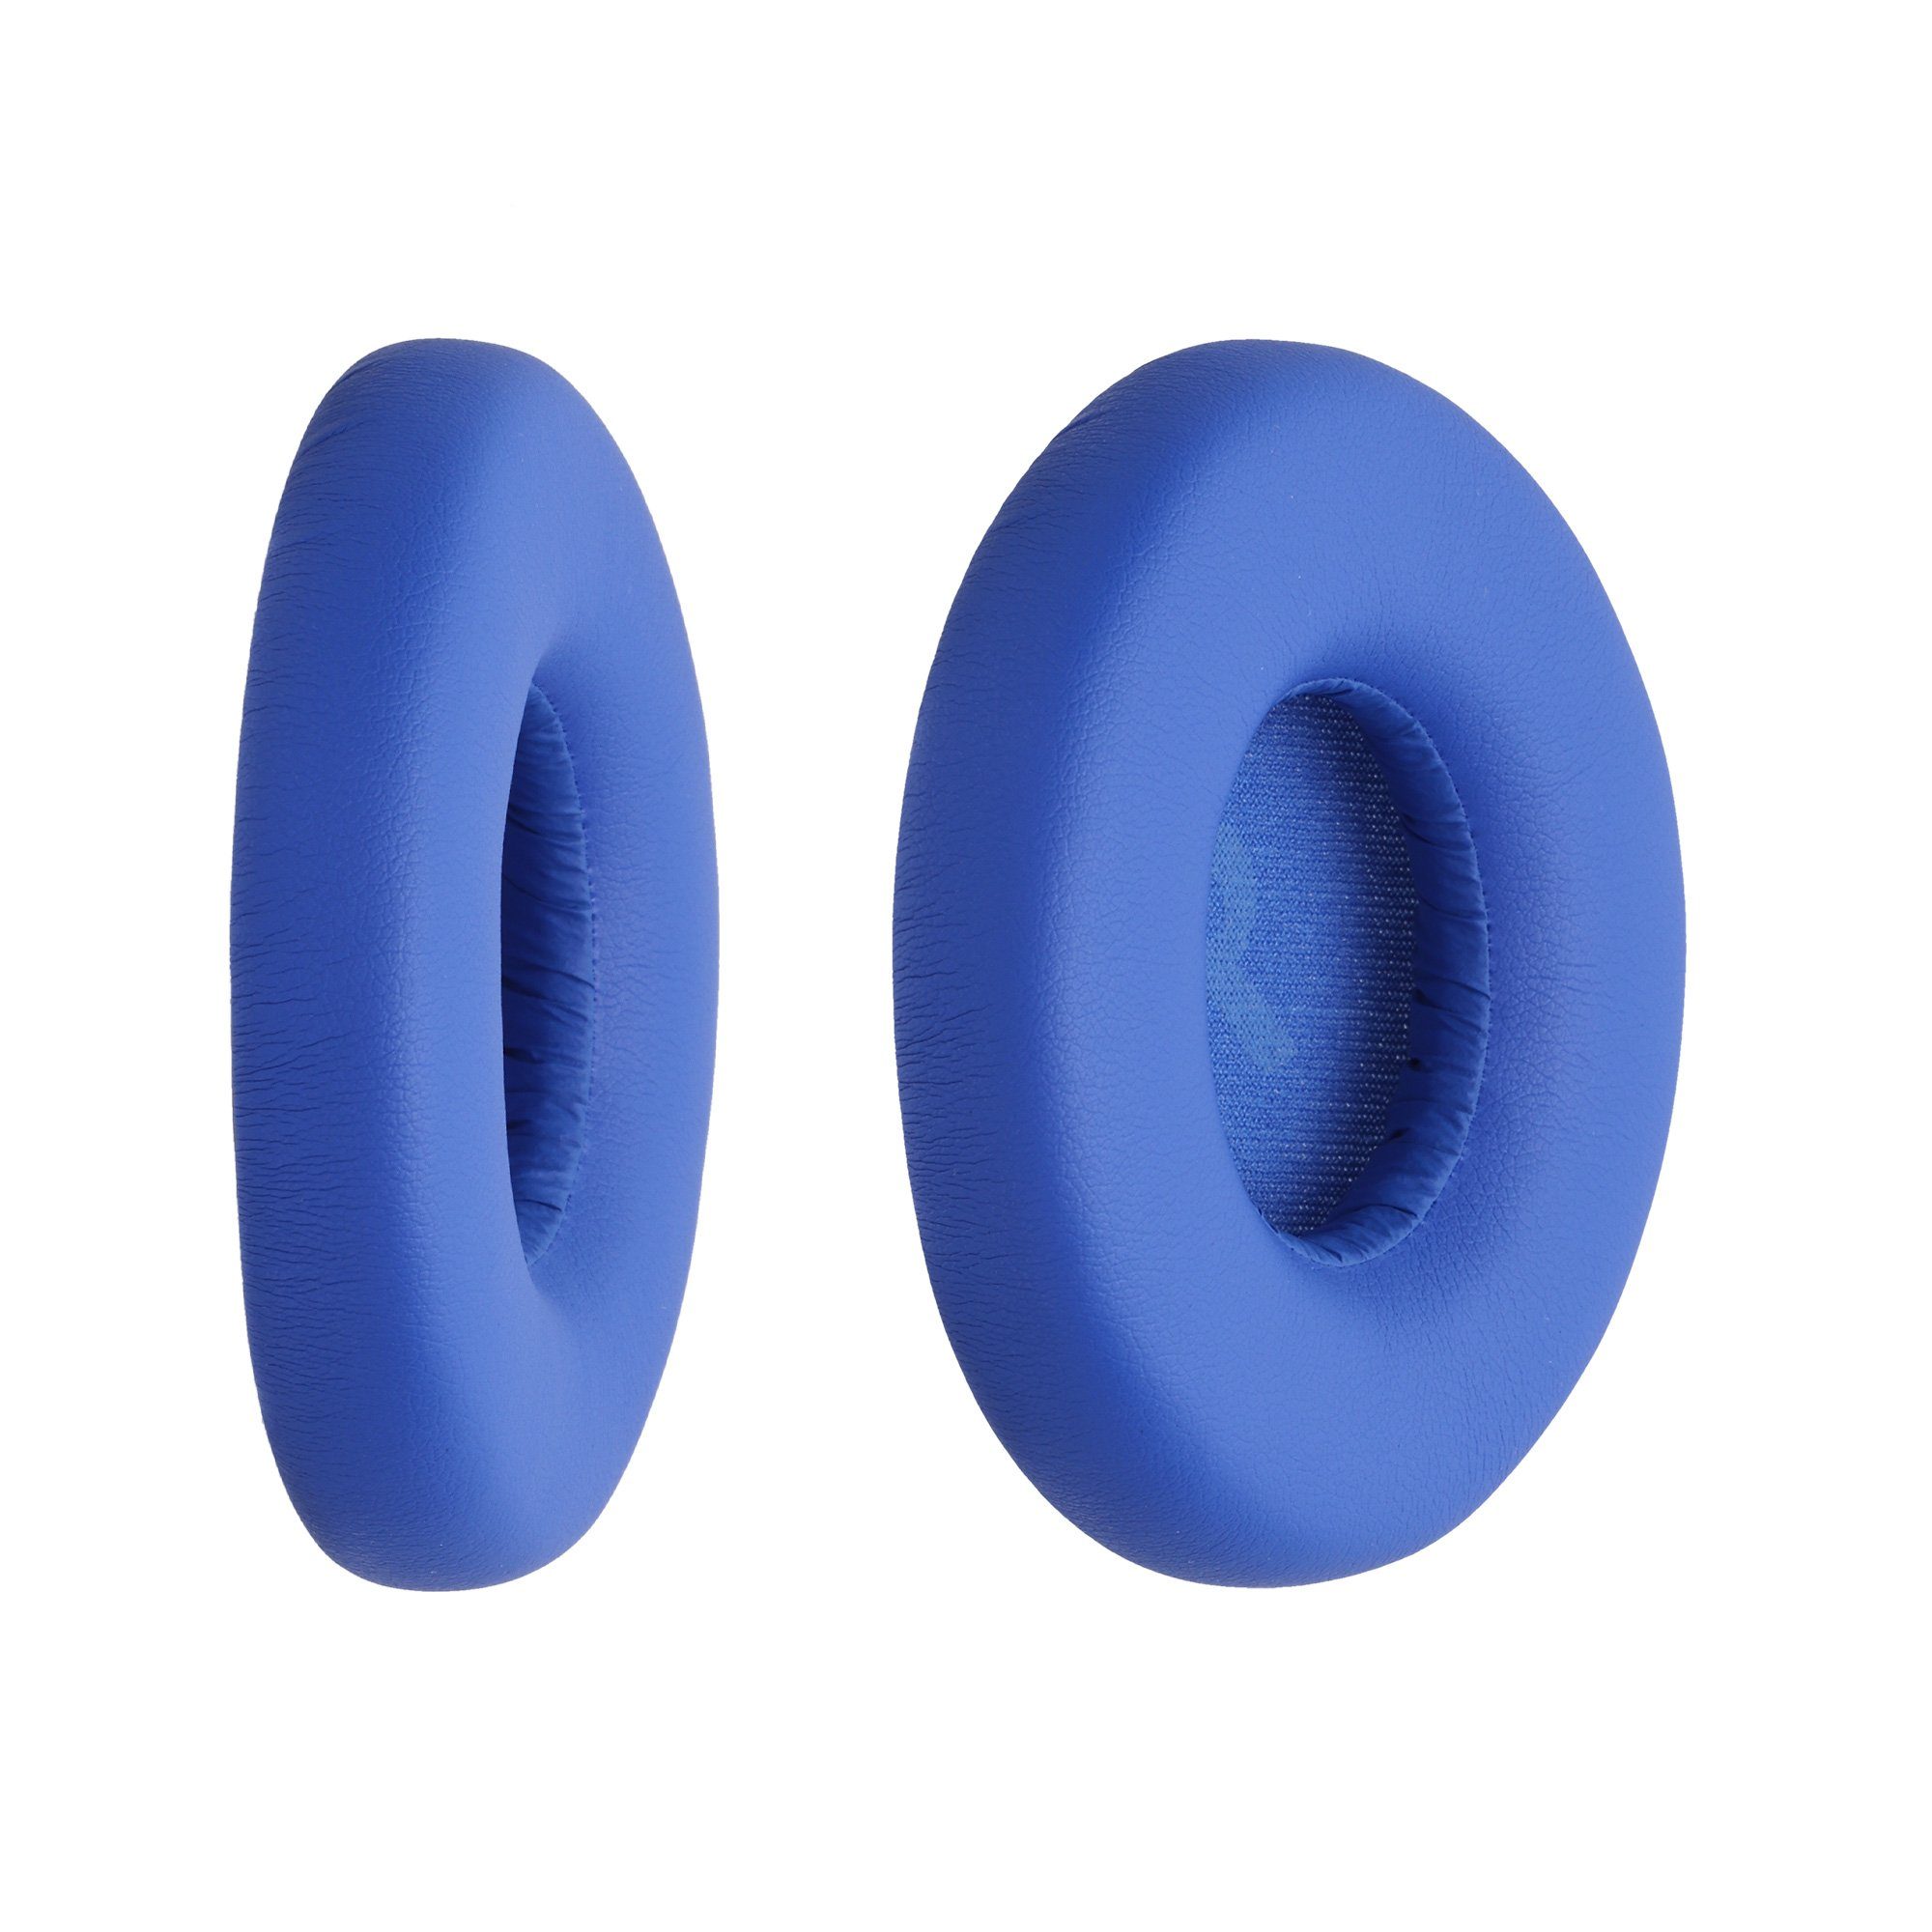 kwmobile 2x Ohrpolster JBL - Ear Polster T450BT Tune Headphones) / Kopfhörer / für Ohr Blau (Ohrpolster 600BTNC 500BT Kunstleder Polster Over für